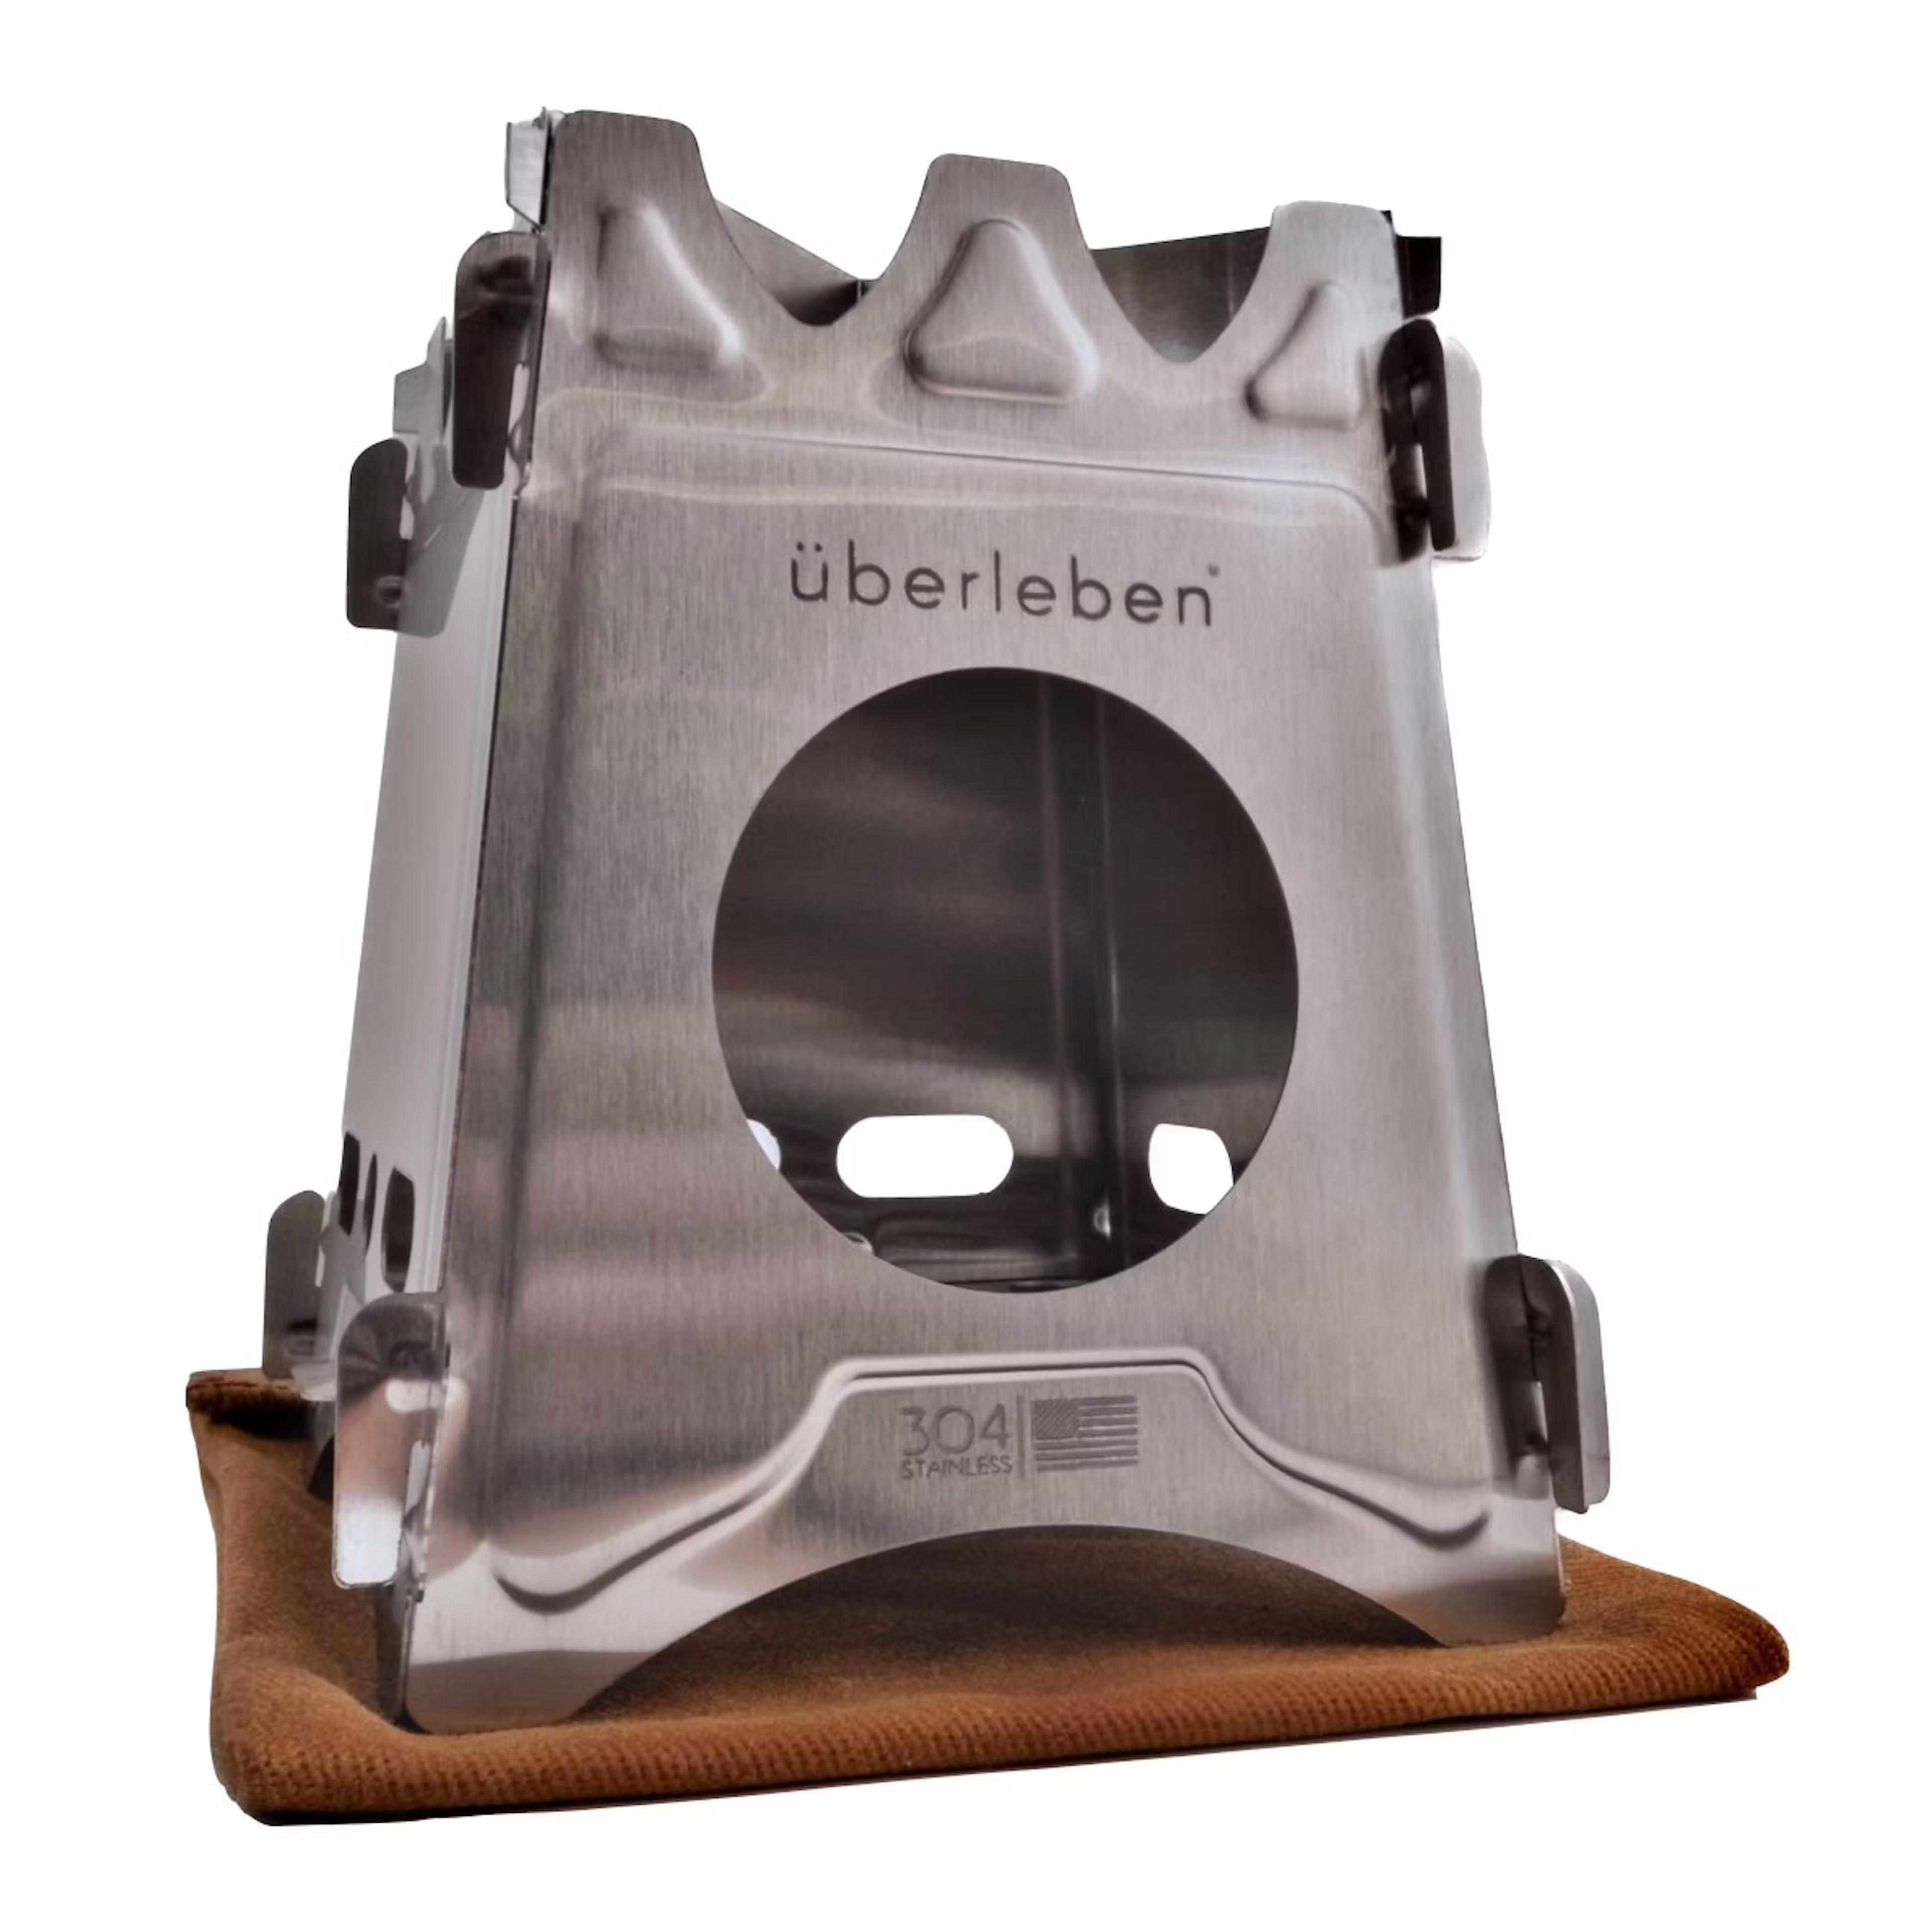 Uberleben Stoker Stainless Steel Stove - Stainless Steel | Camping Gear | Huckberry